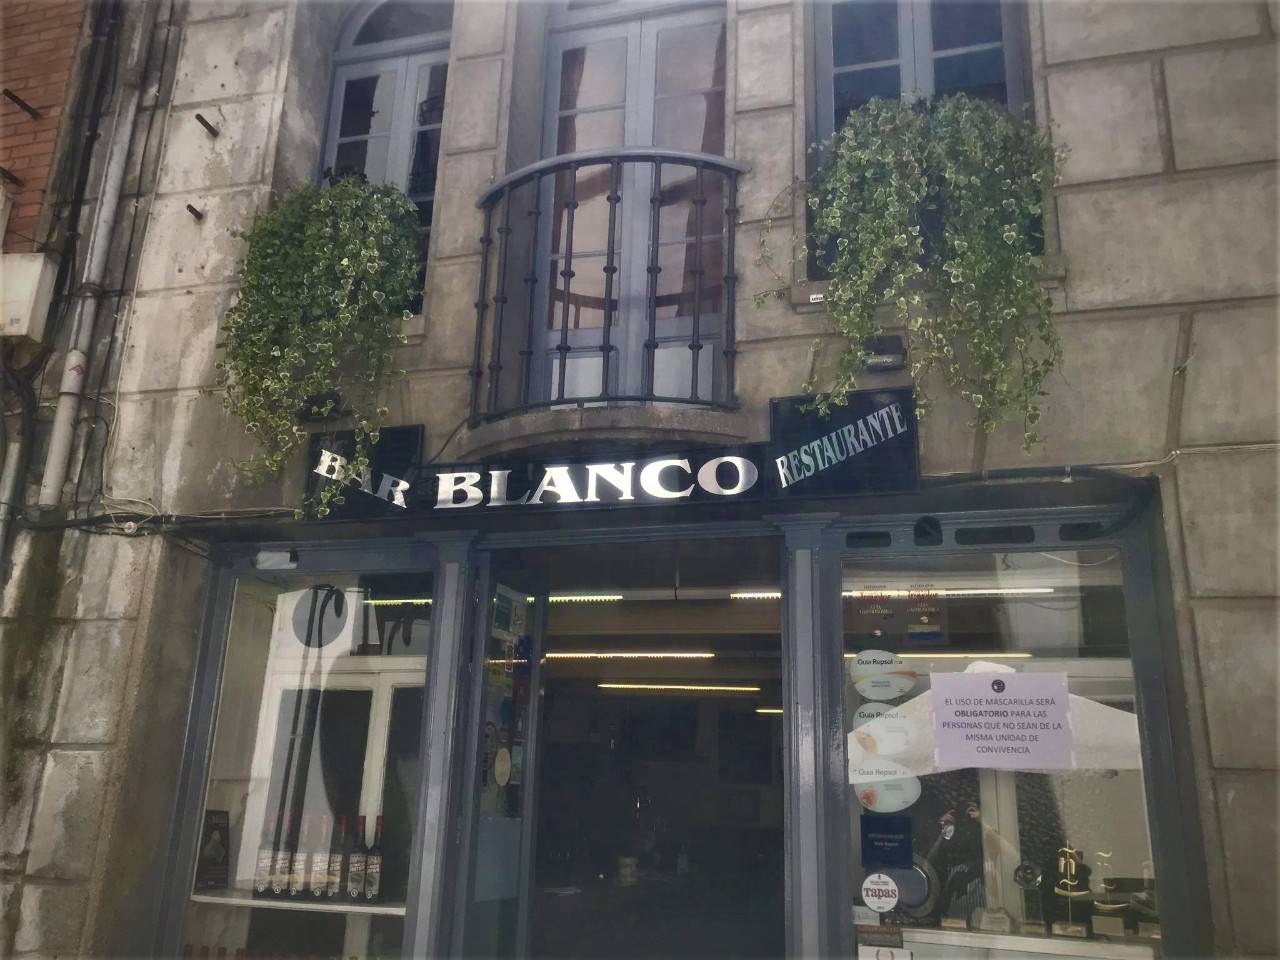 Blanco Restaurante